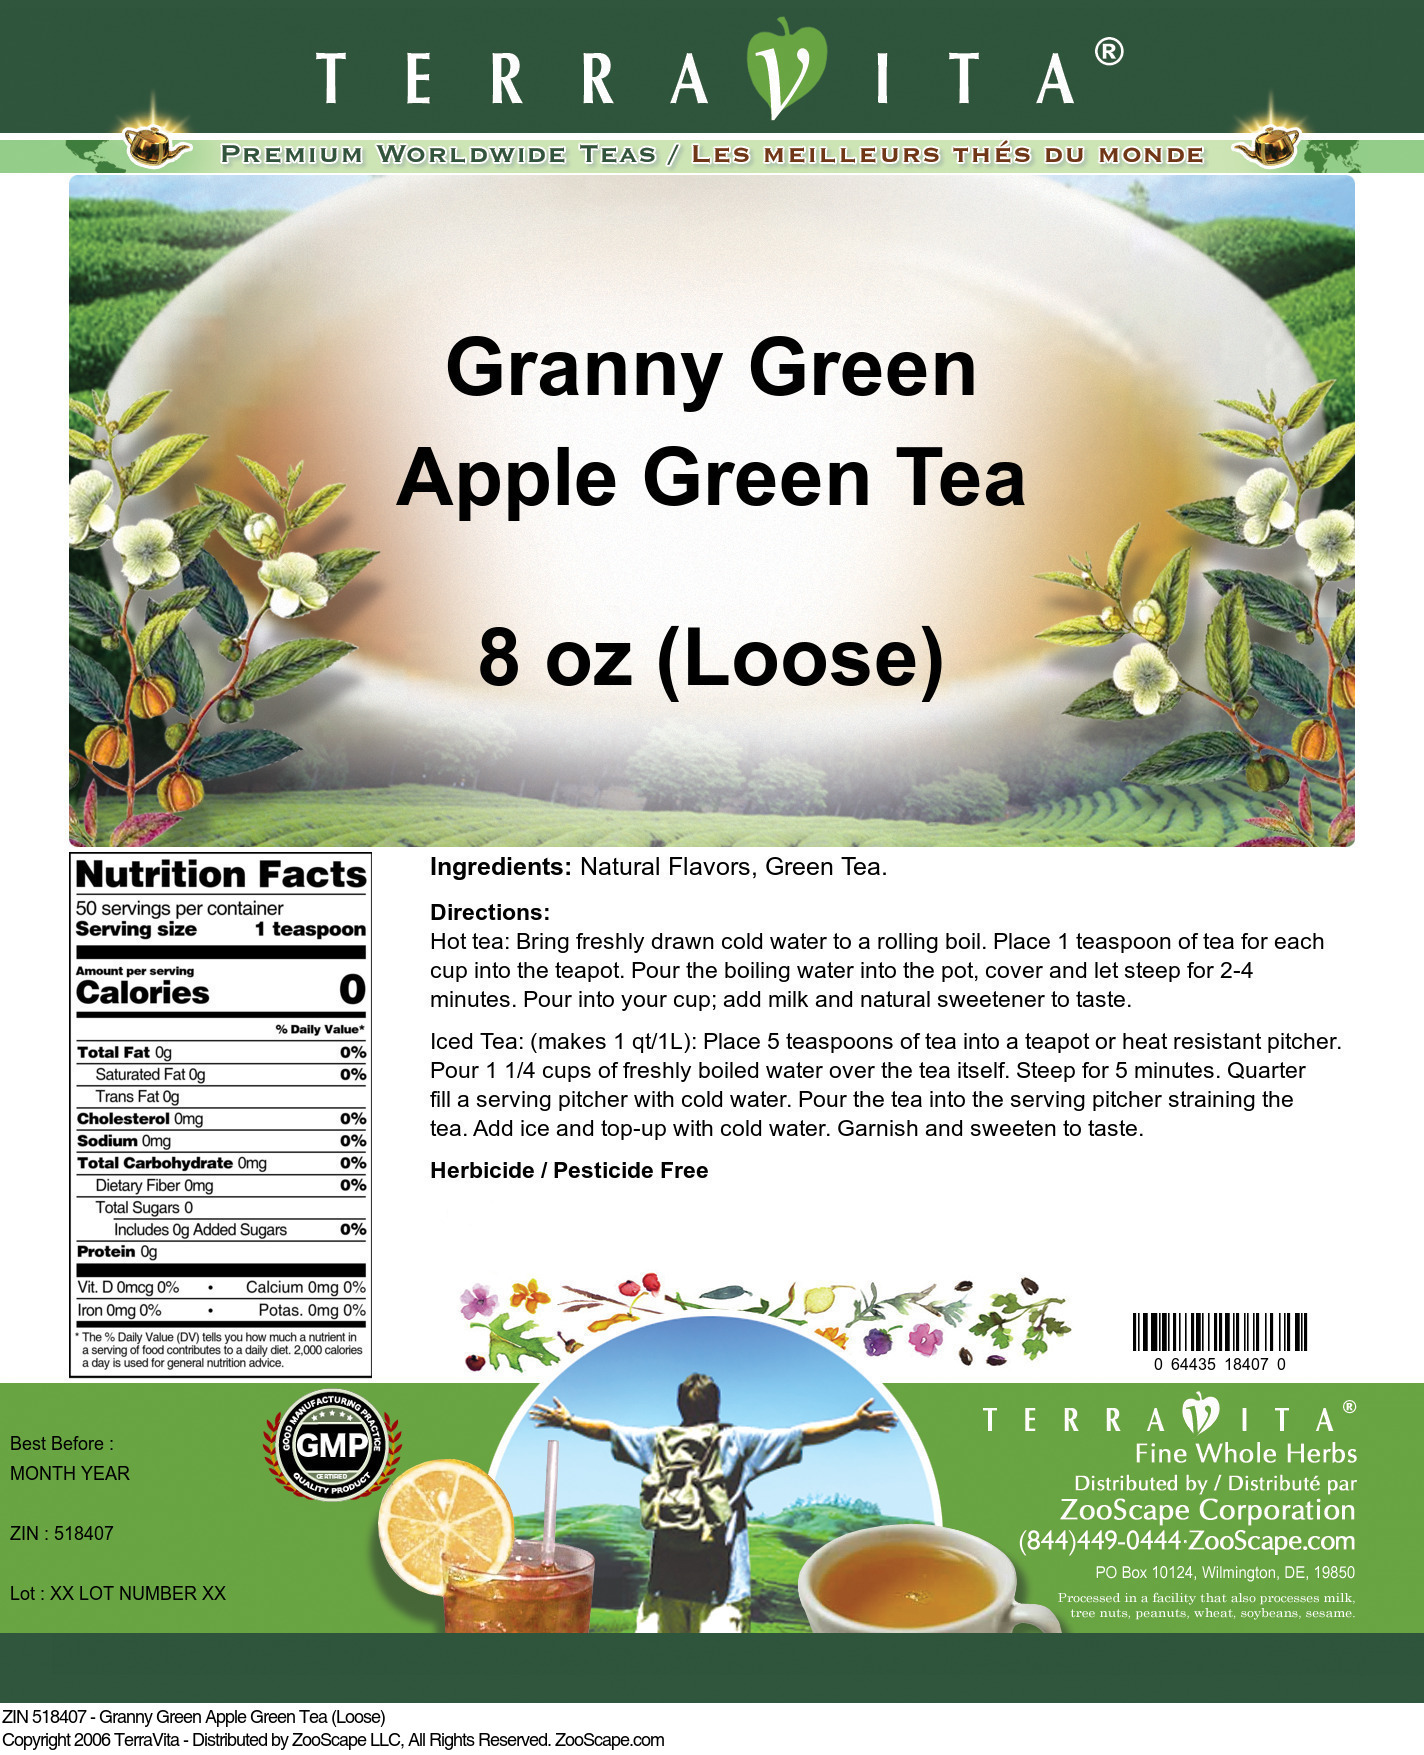 Granny Green Apple Green Tea (Loose) - Label